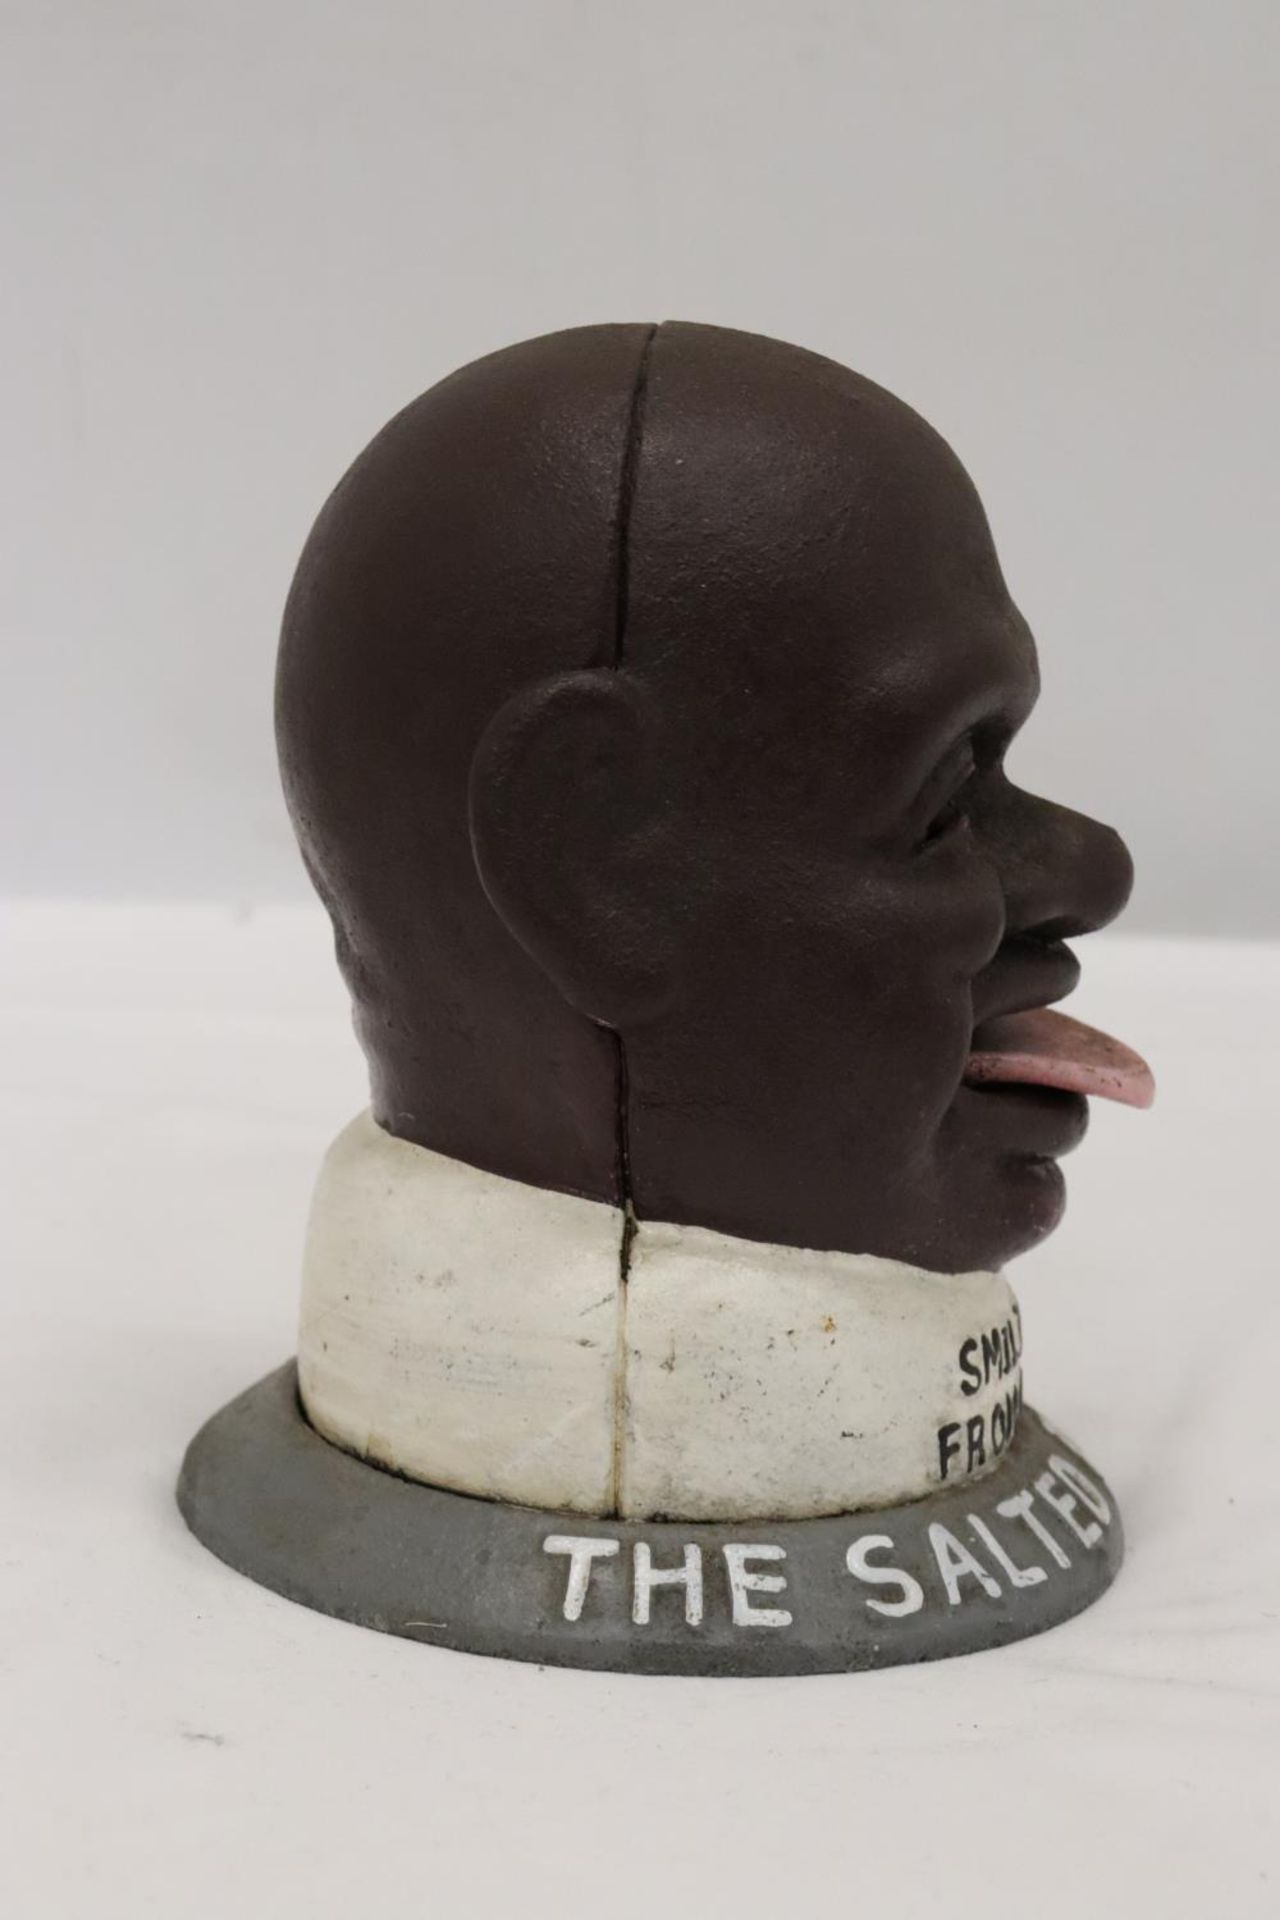 A HEAVY CAST IRON MONEY BOX, 'SMILIN' SAM, THE SALTED PEANUT MAN' - Image 4 of 4